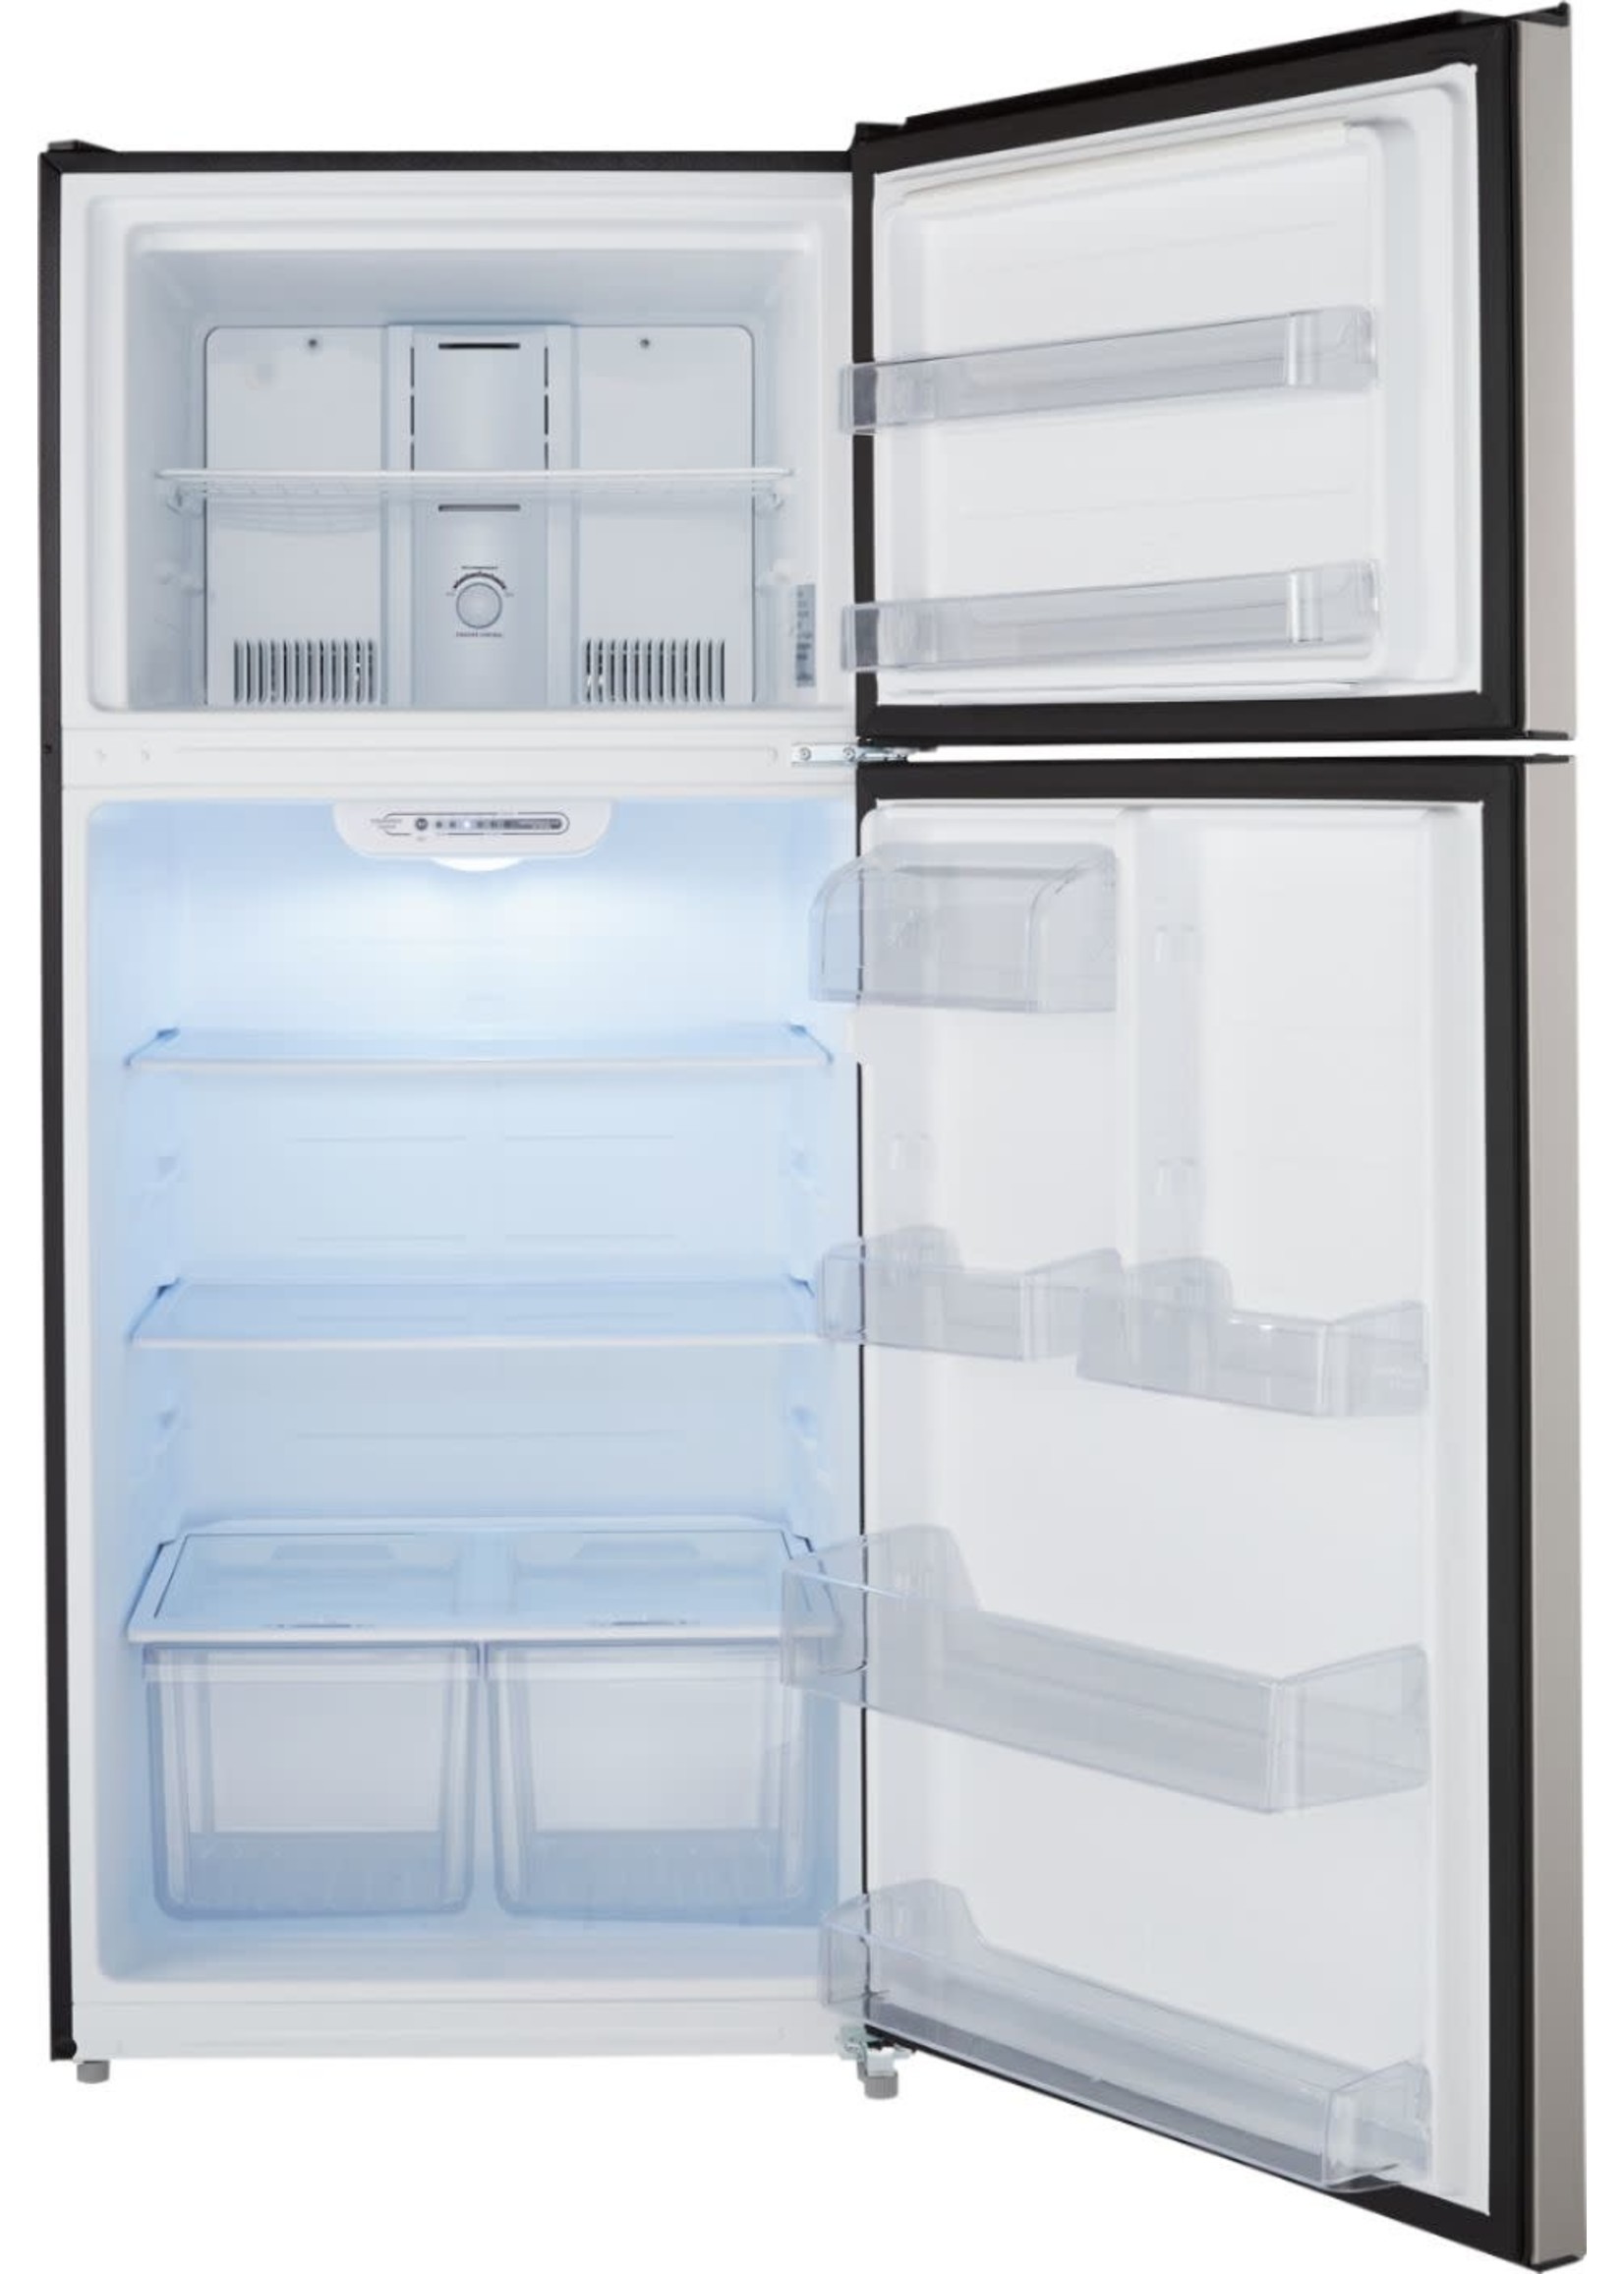 INSIGNIA Insignia™ - 18 Cu. Ft. Top-Freezer Refrigerator - Stainless steel